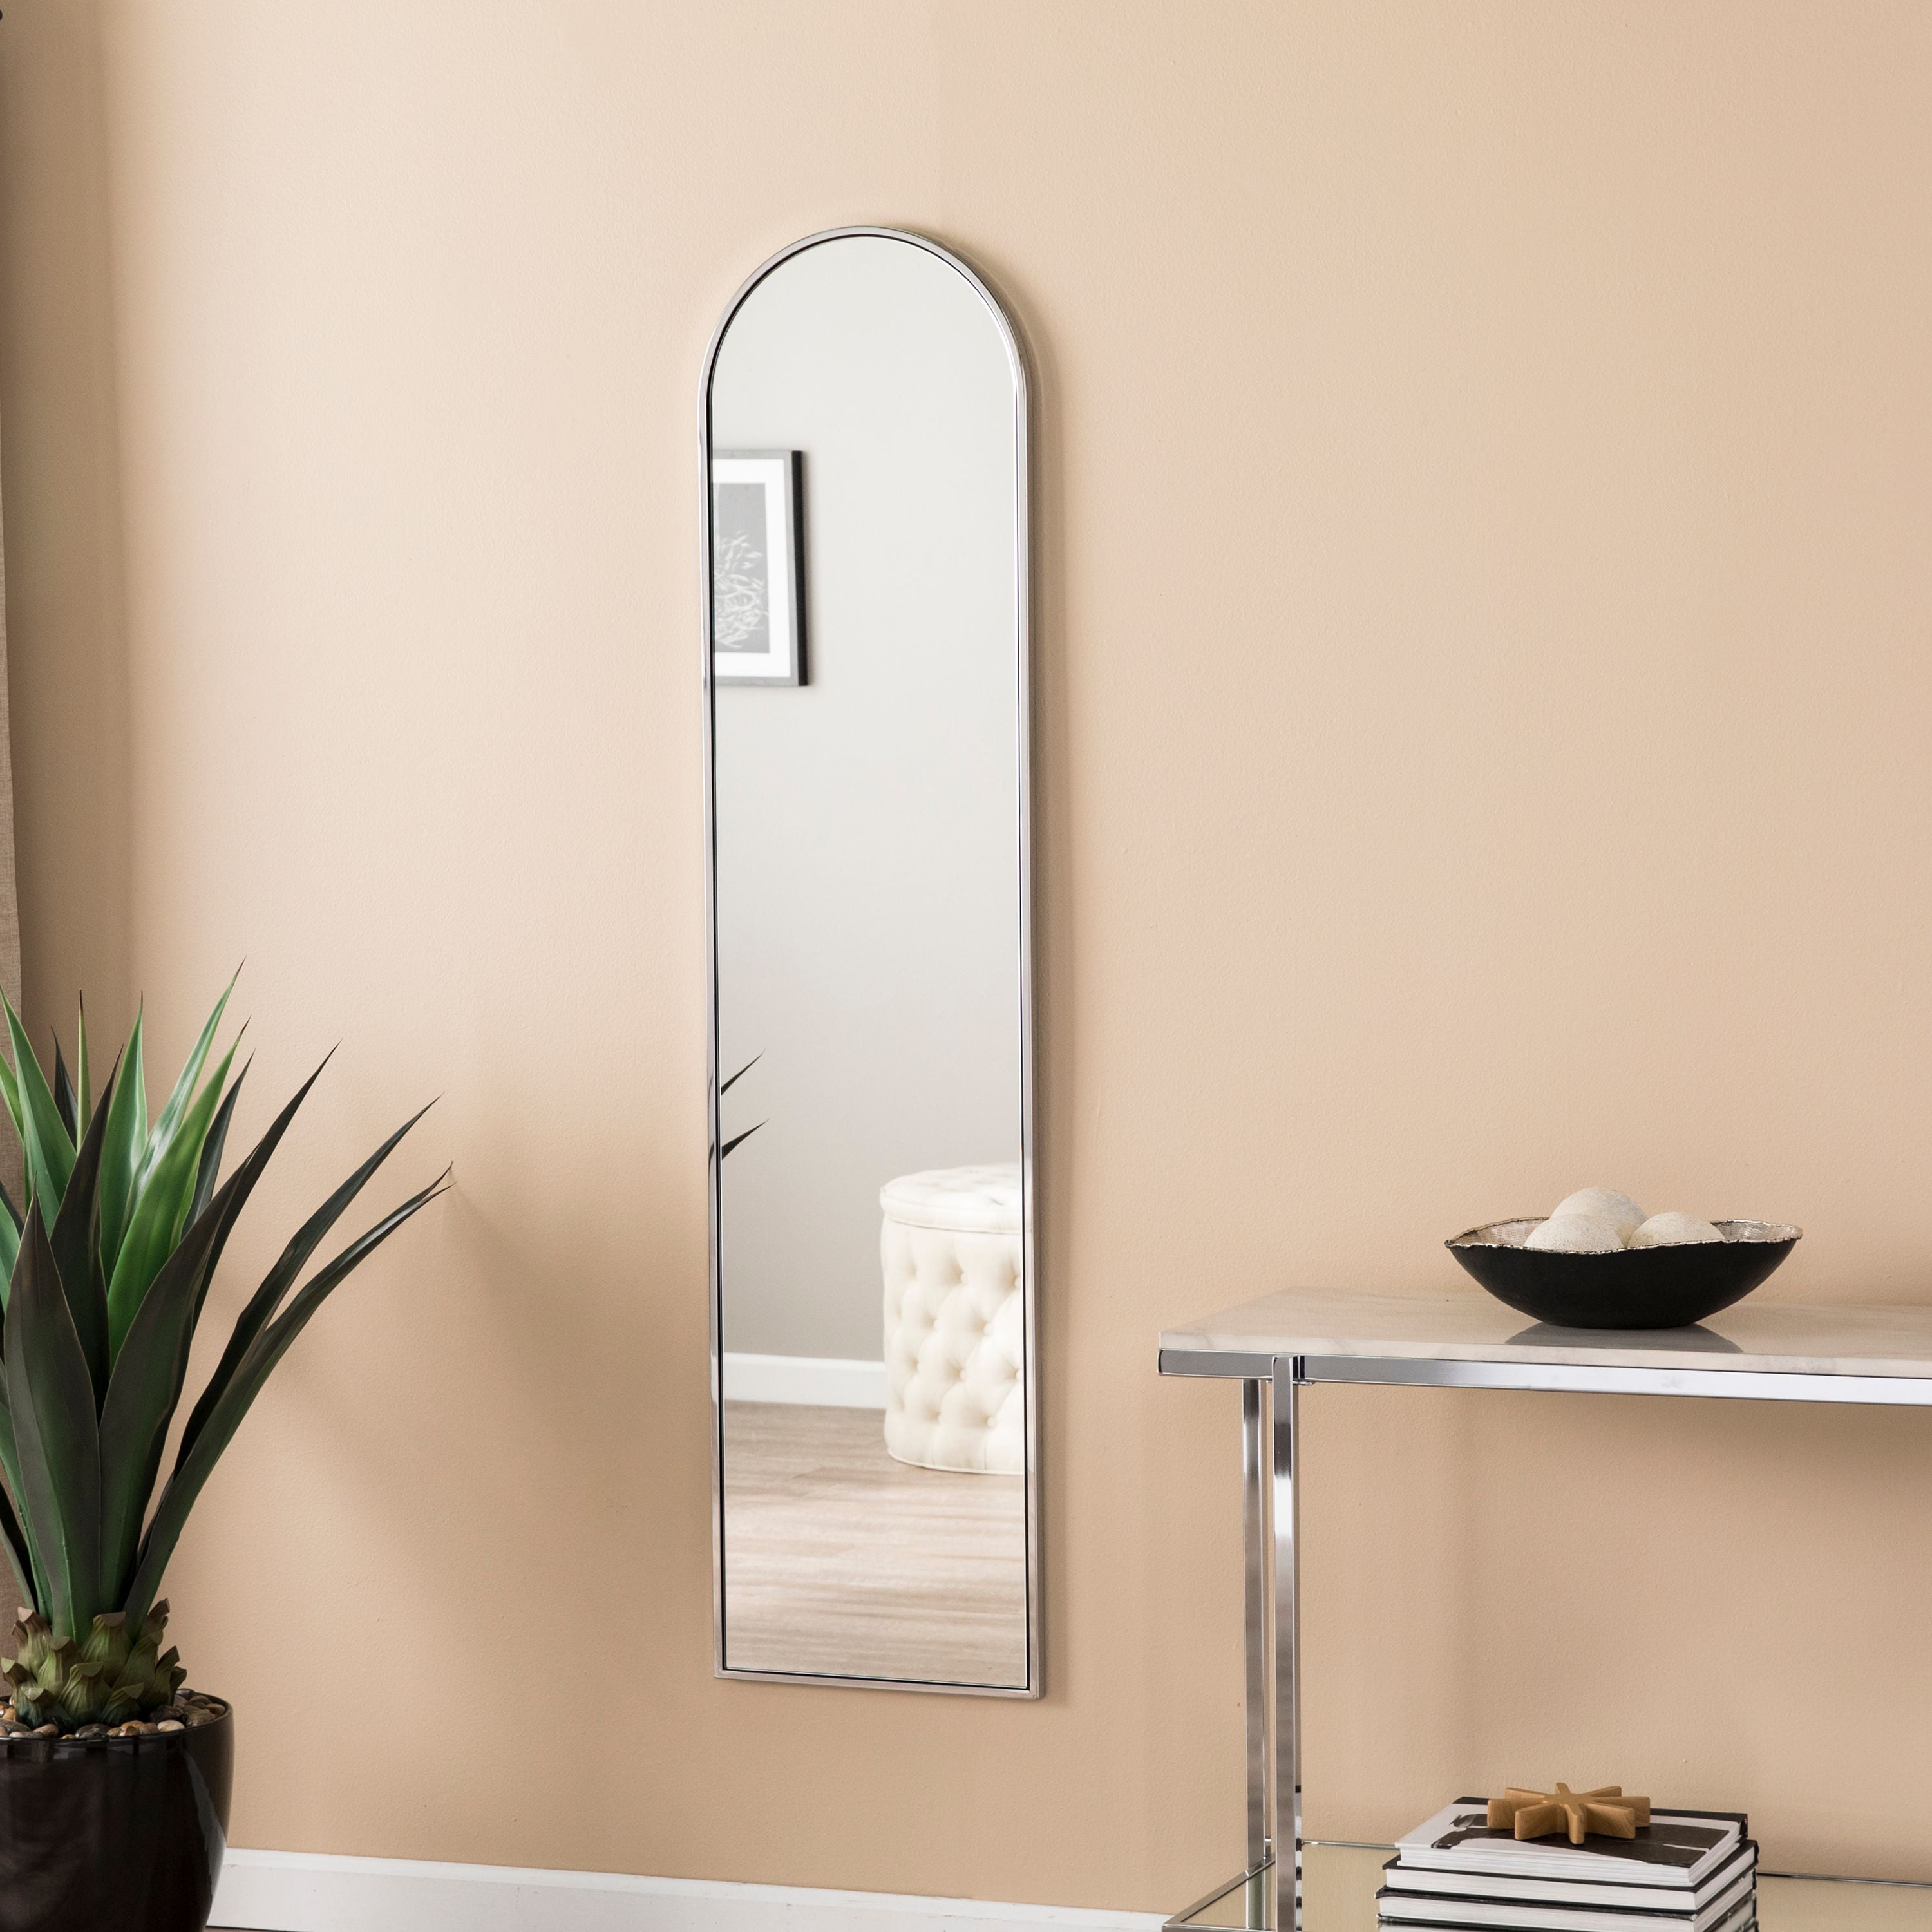 Kalis Decorative Full-Length Mirror, High gloss metallic chrome